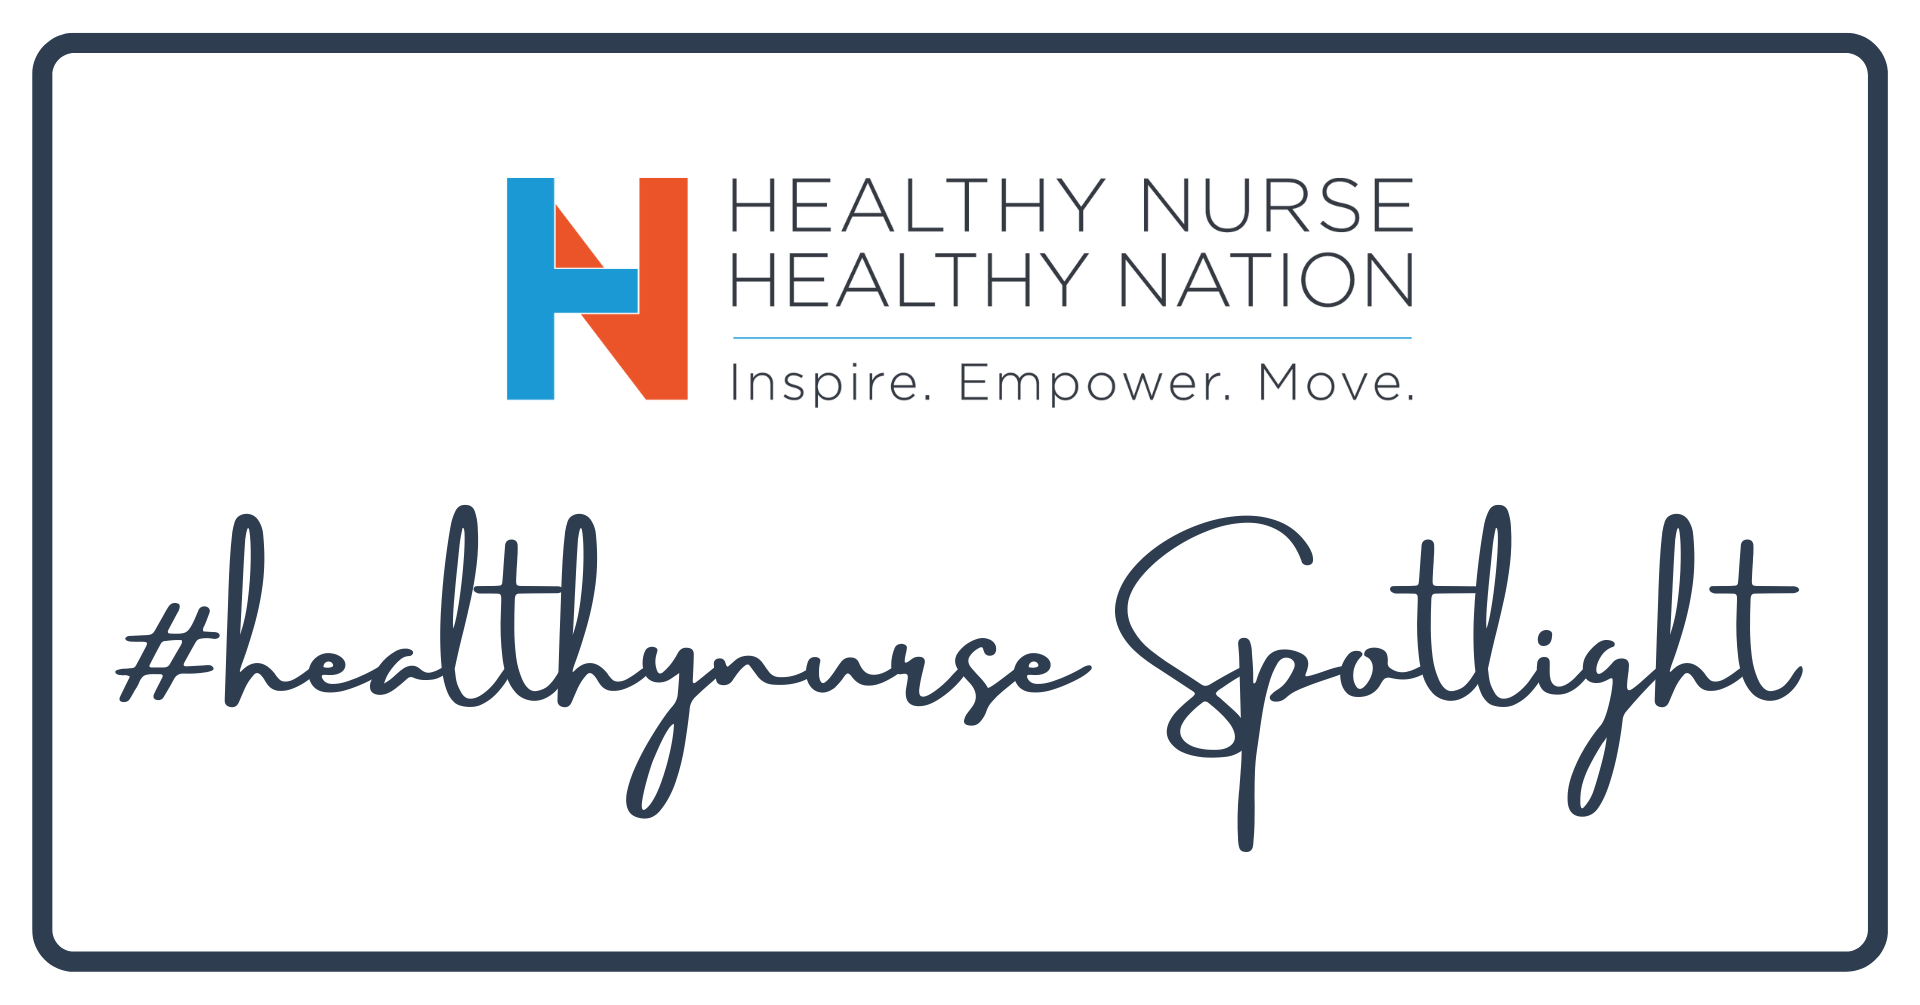 Healthy Nurse, Healthy Nation™ - #healthynurse Spotlight Series - Terri-Ann Kelly, PhD, RN, CPT 4322